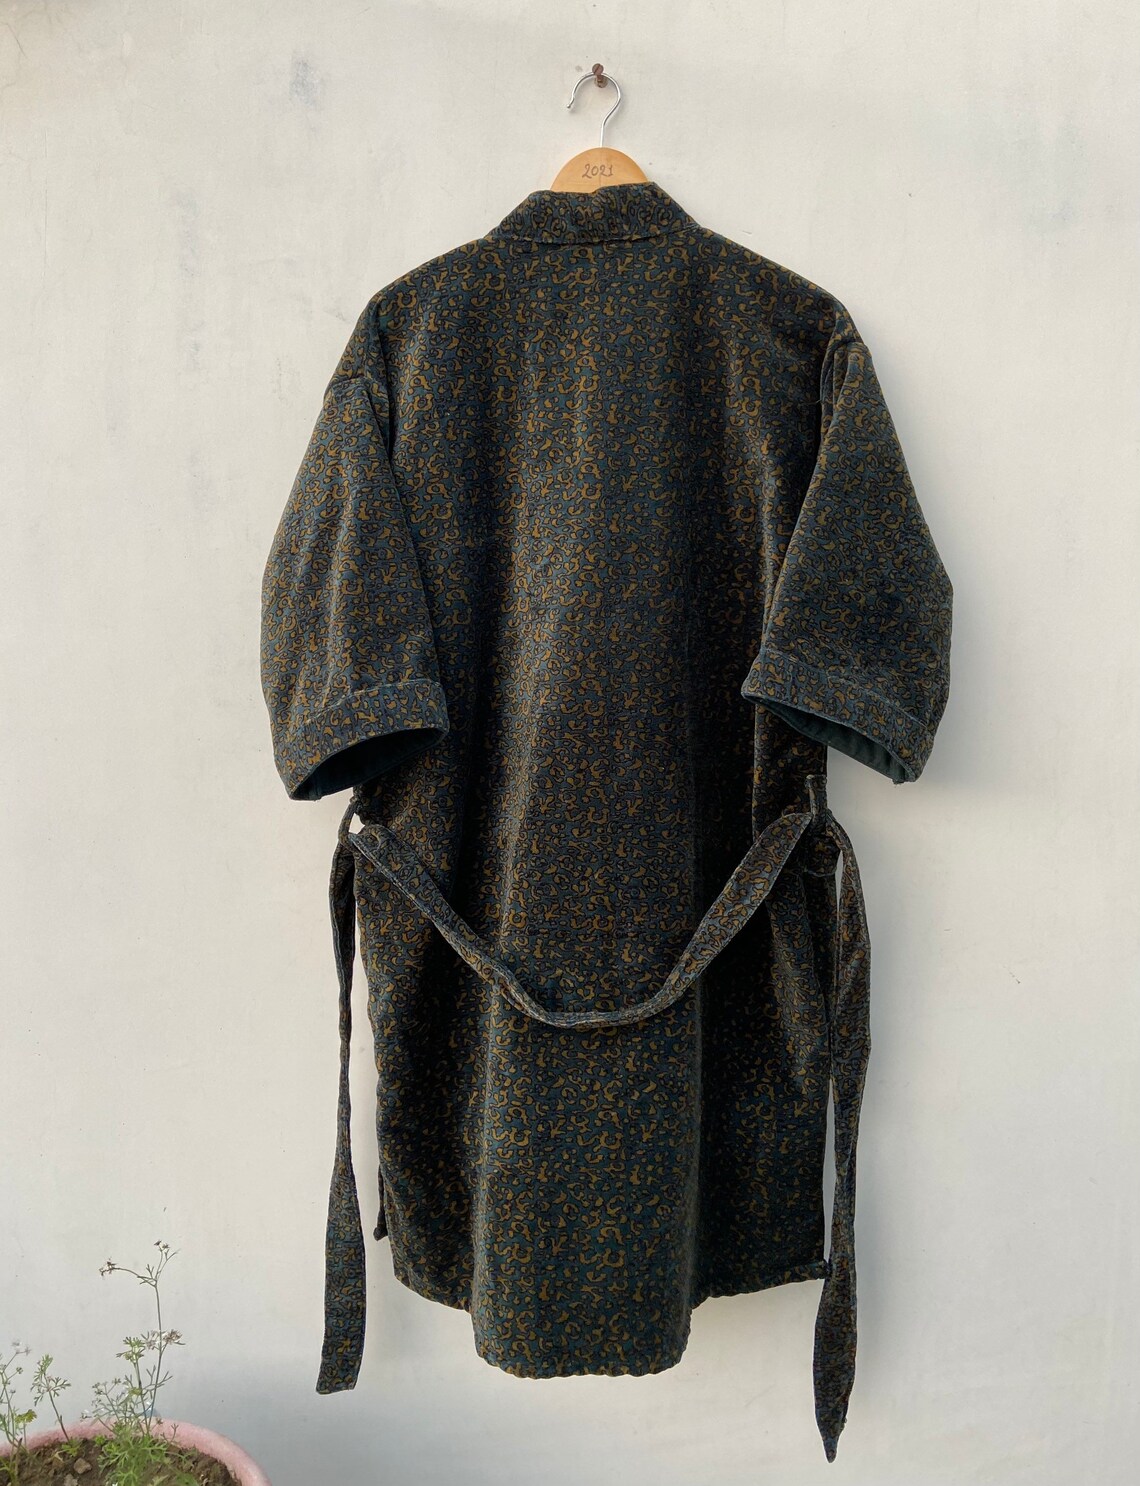 Tiger Print Velvet Boho Jacket Japanese Kimono Style Ethic | Etsy